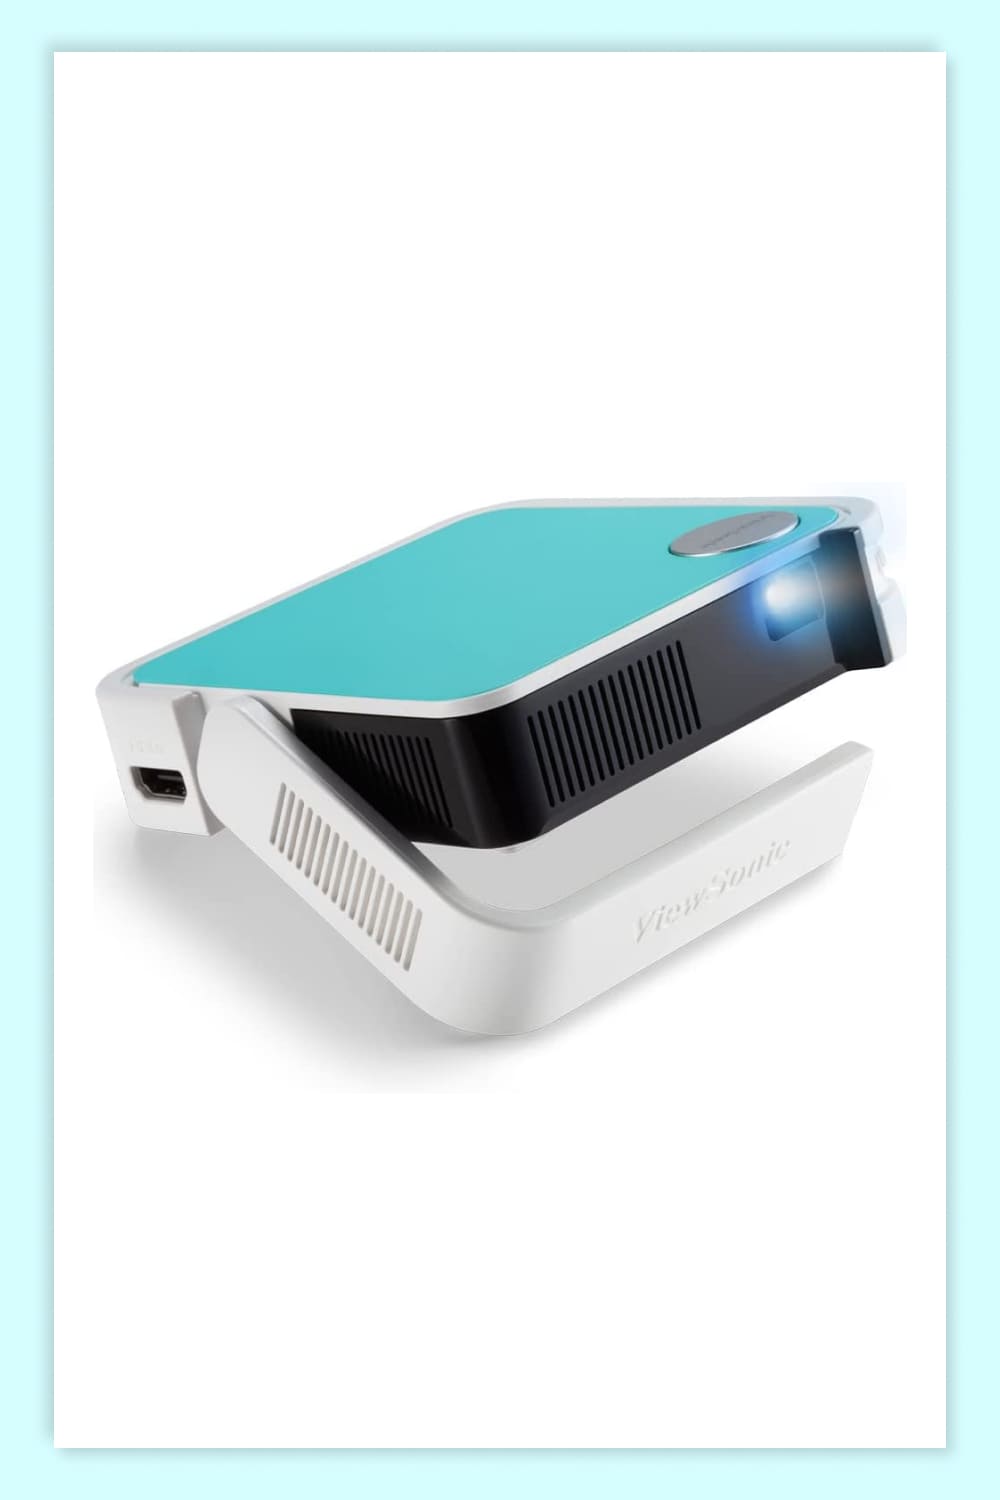 ViewSonic M1 Mini Ultra Portable LED Projector with Auto Keystone.